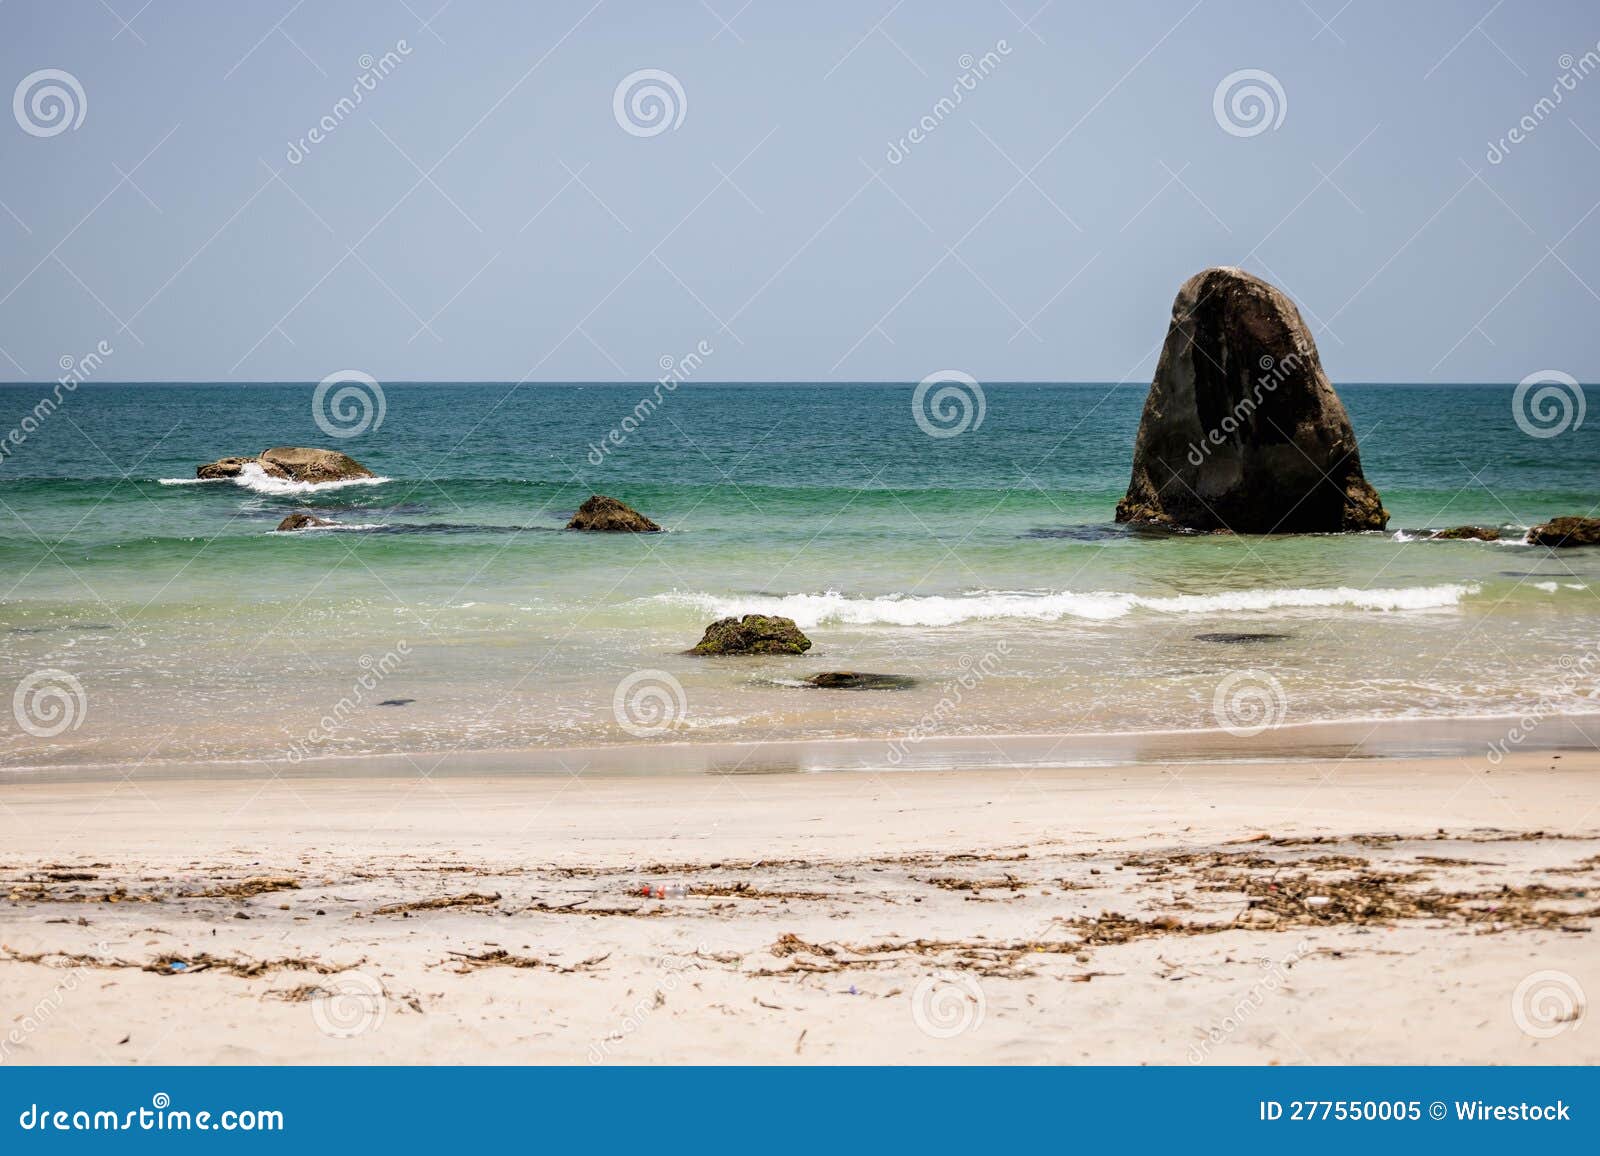 tranquil sea with rocks at black beach, praia preta, brazil.